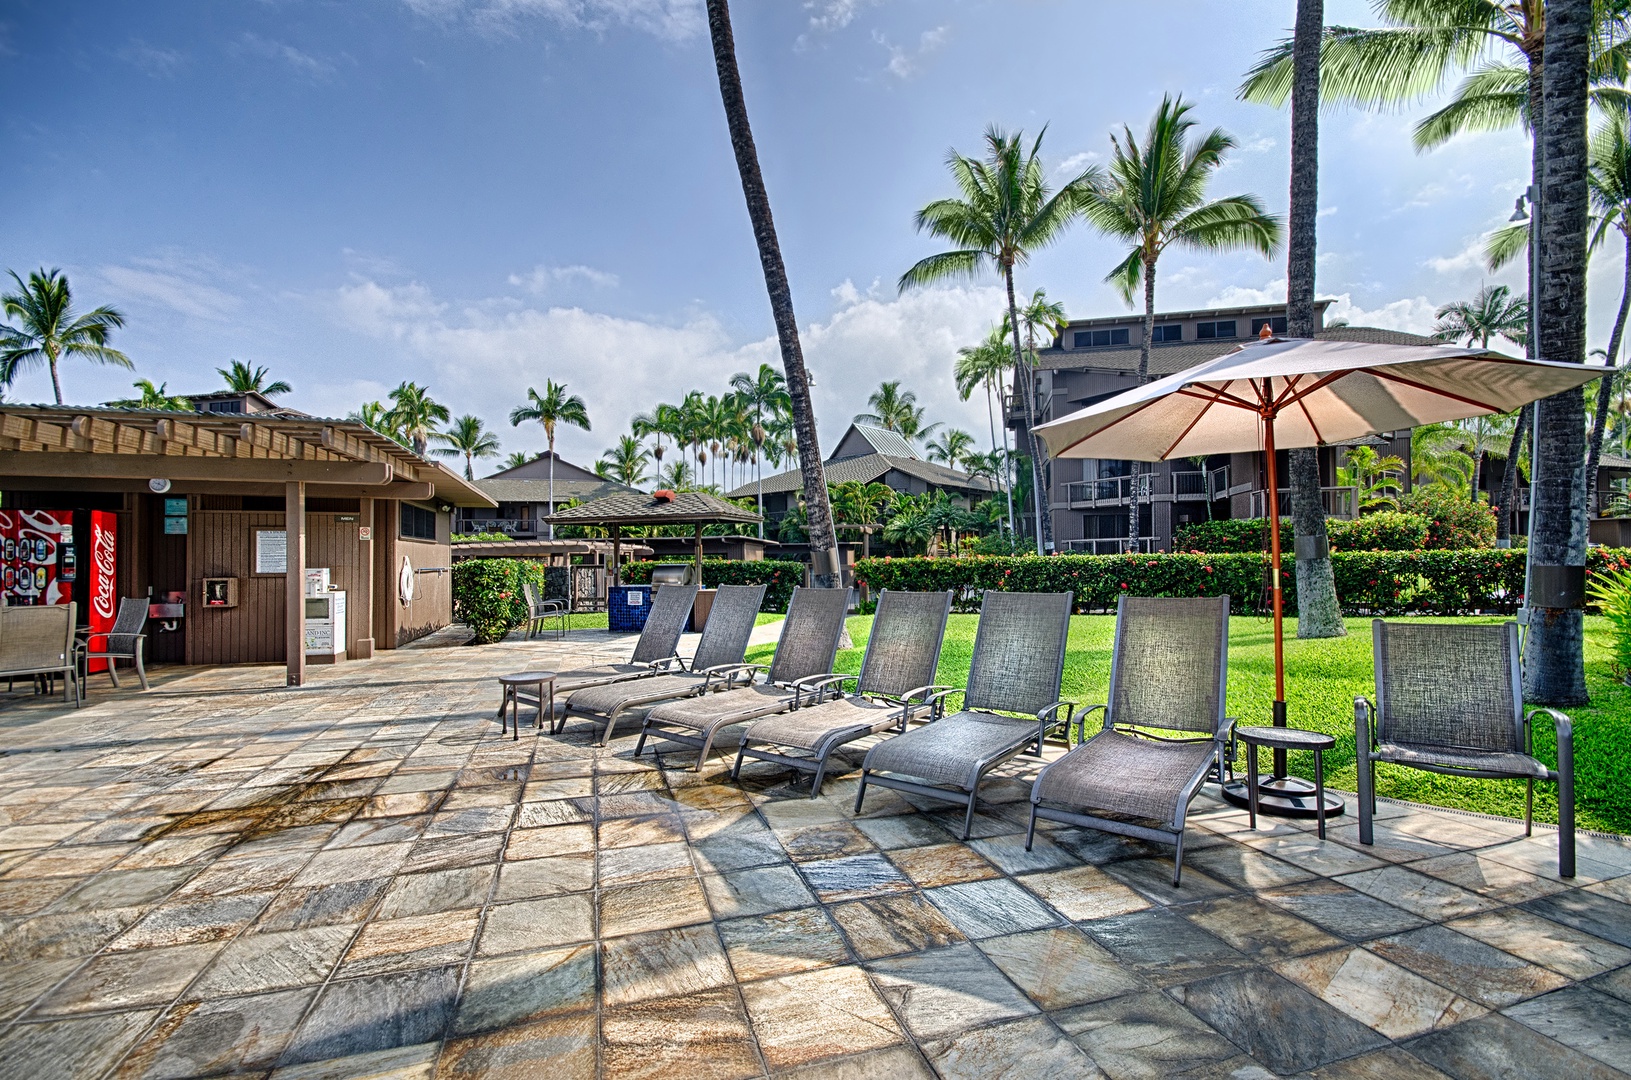 Kailua Kona Vacation Rentals, Kanaloa 701 - Pool area with sun beds